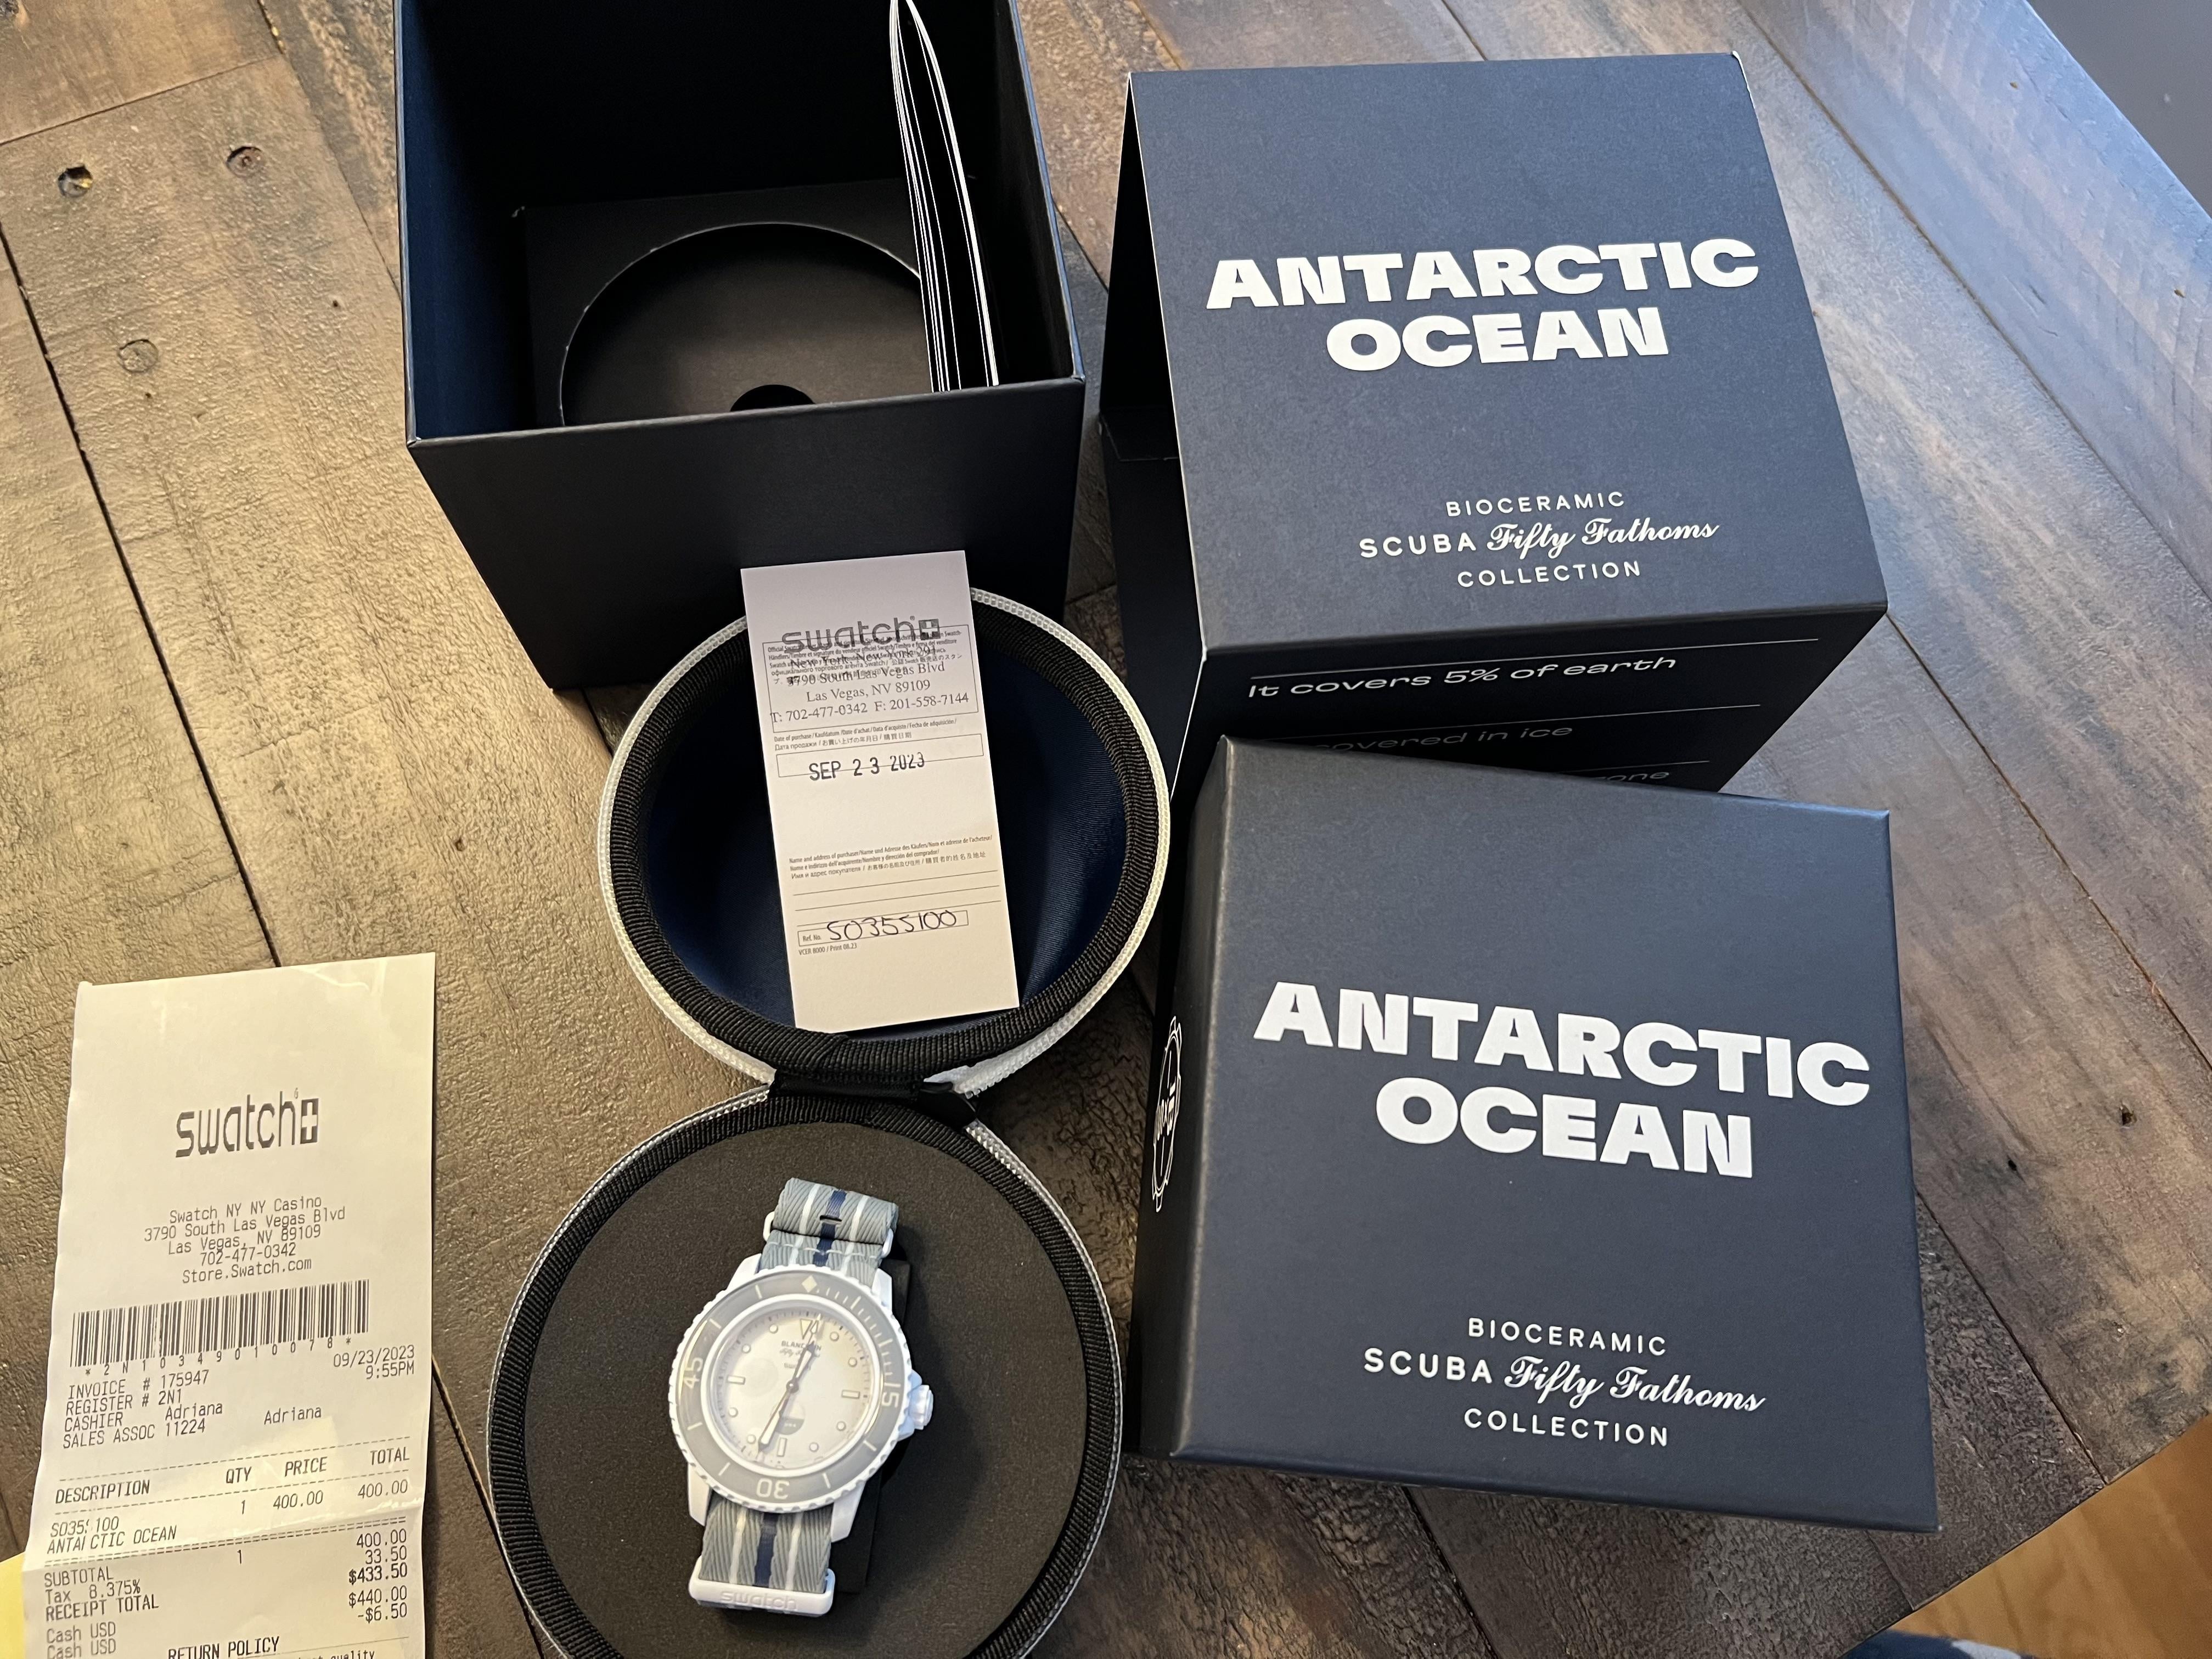 WTS] Blancpain x Swatch Fifty Fathoms Antarctic Ocean - BNIB